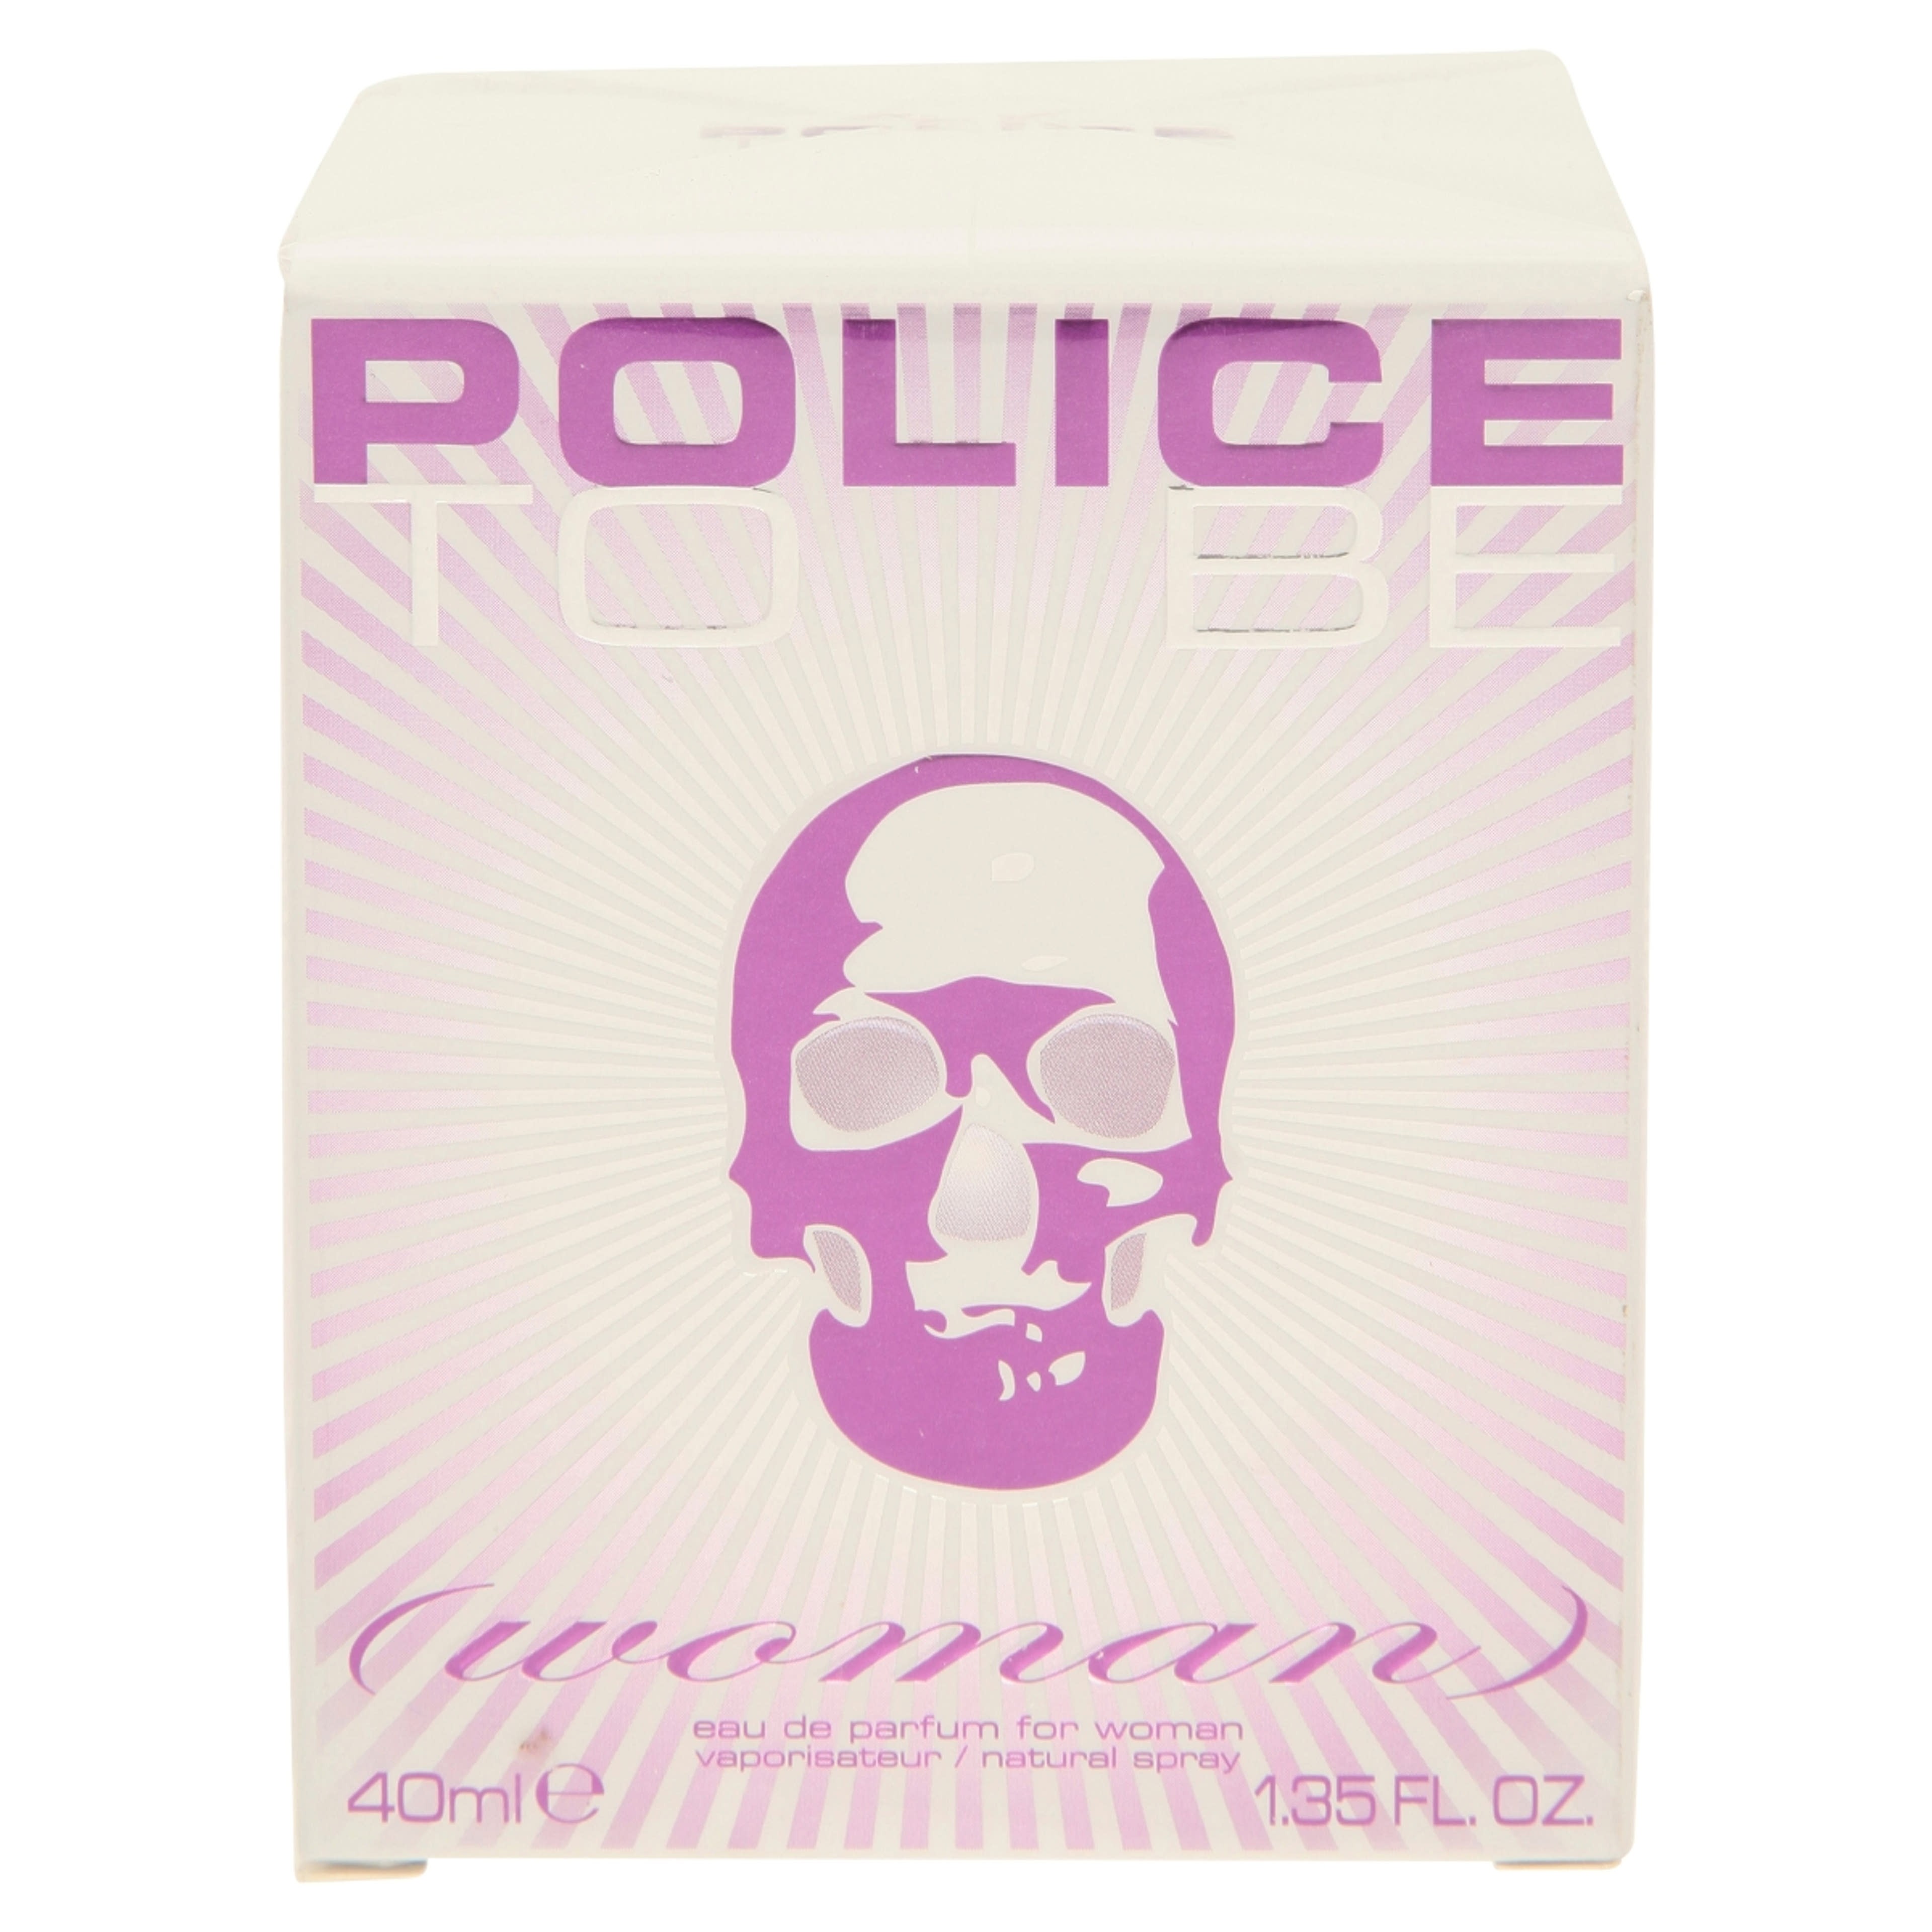 Police To Be női Eau de Toilette - 40 ml-1